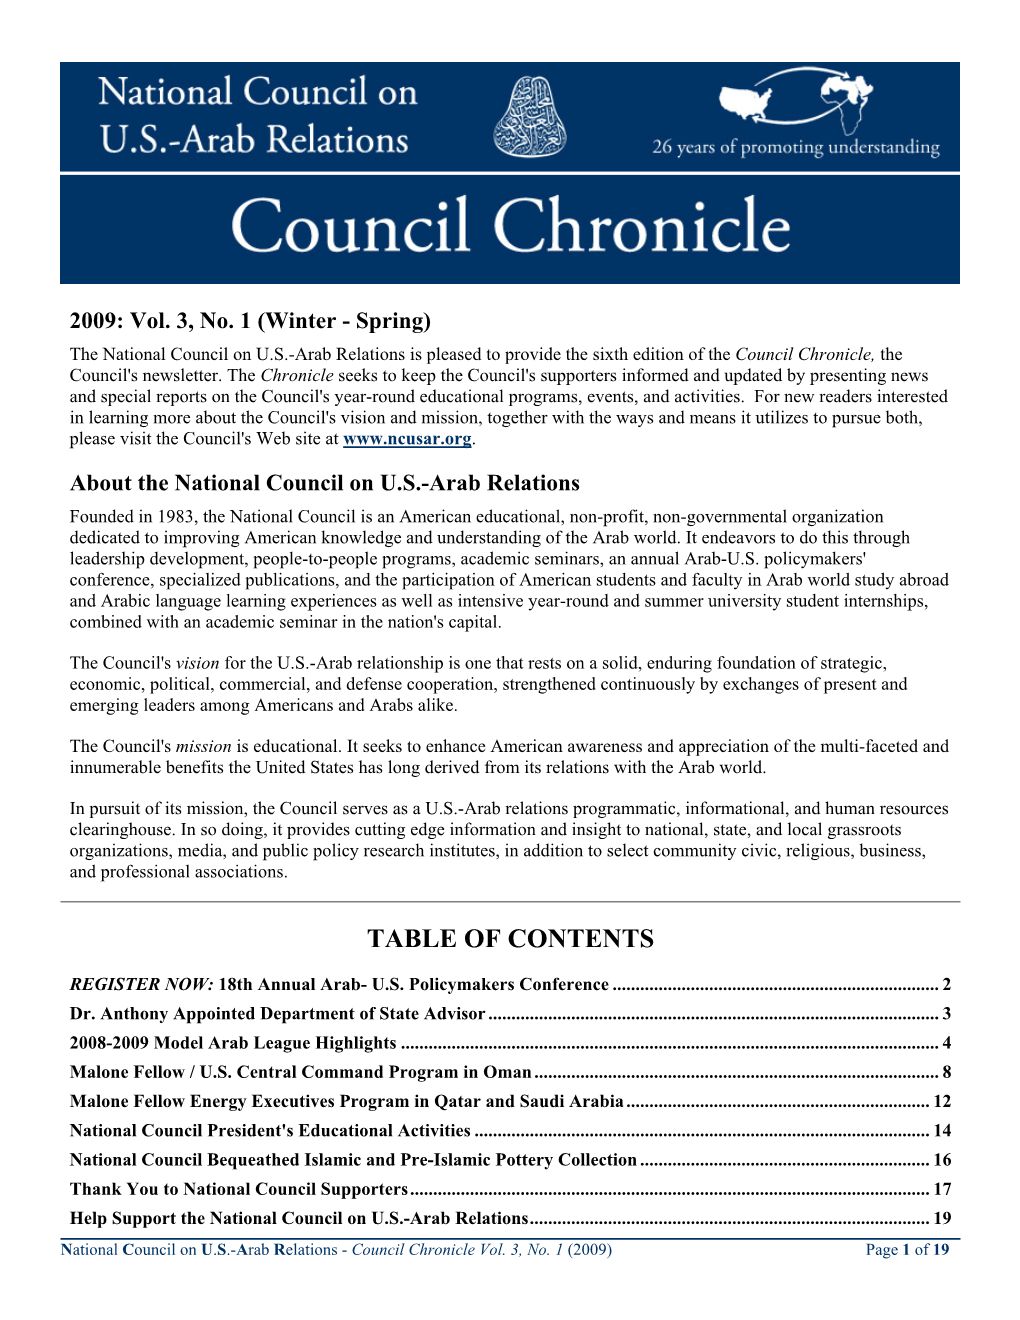 Council Chronicle – Vol. 3, No. 1 (Winter-Spring 2009)